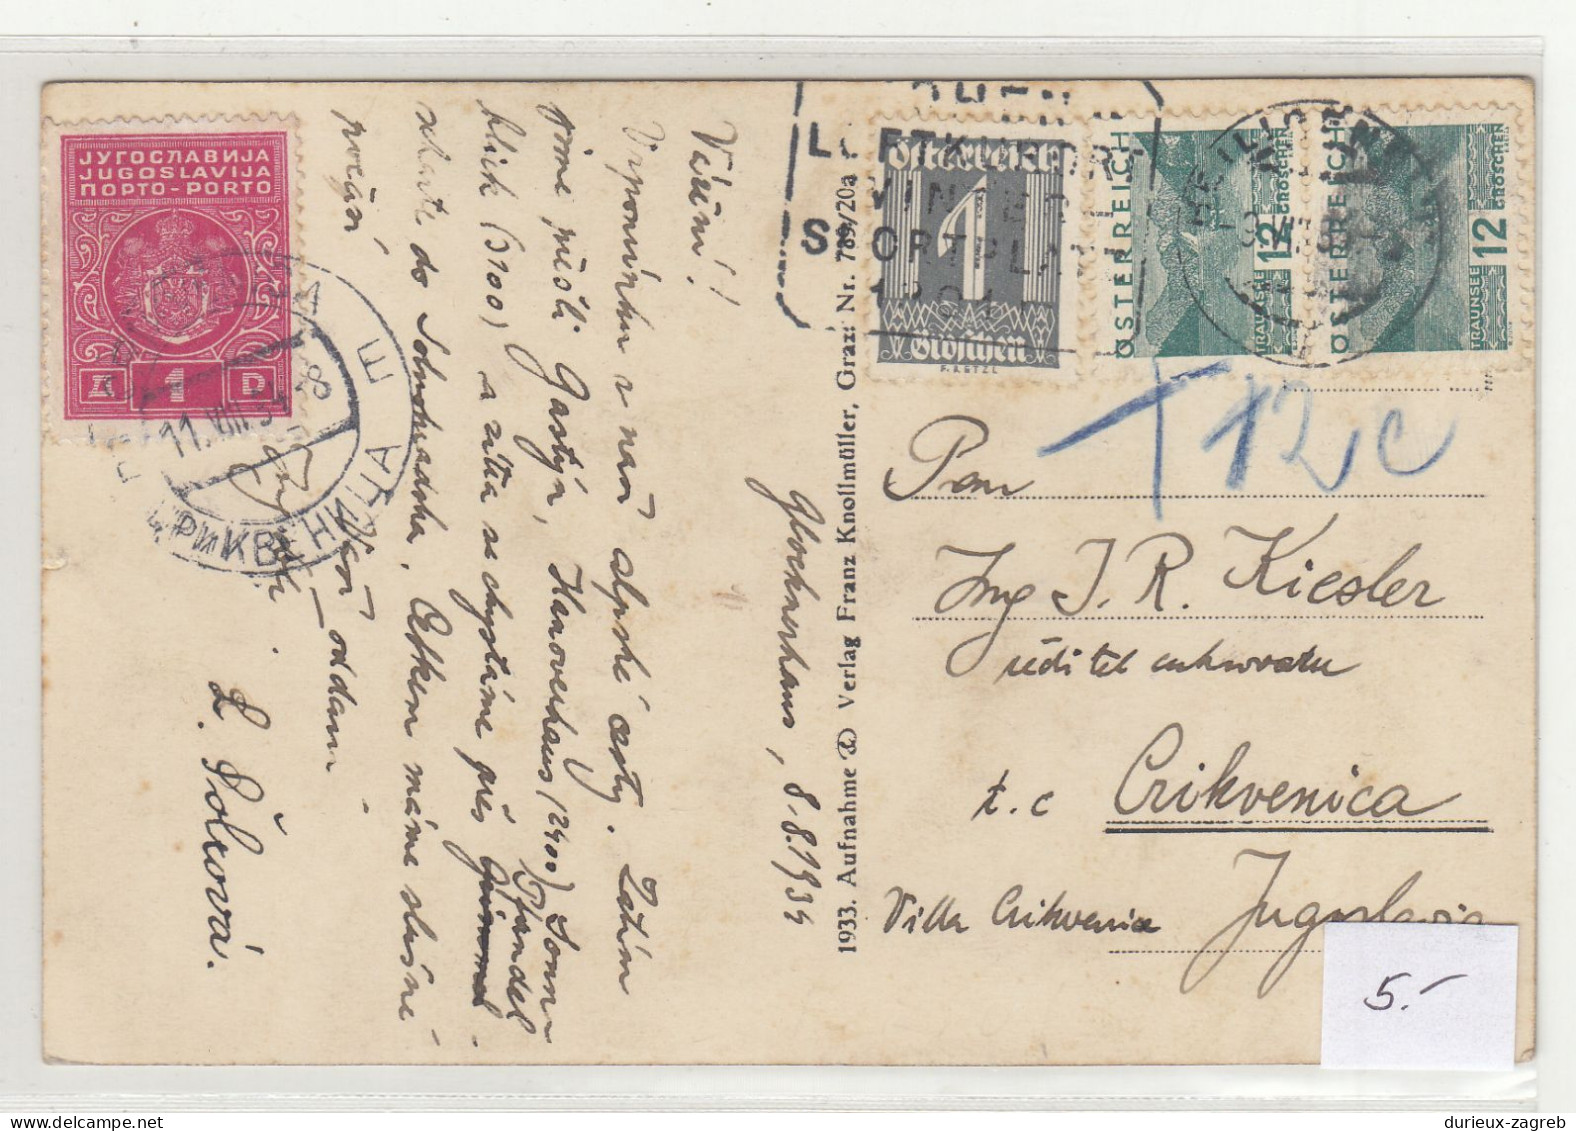 Yugoslavia Kingdom Postage Due Stamp On Postcard Heiligenblutt Posted 1934 Austria To Crikvenica B230720 - Postage Due